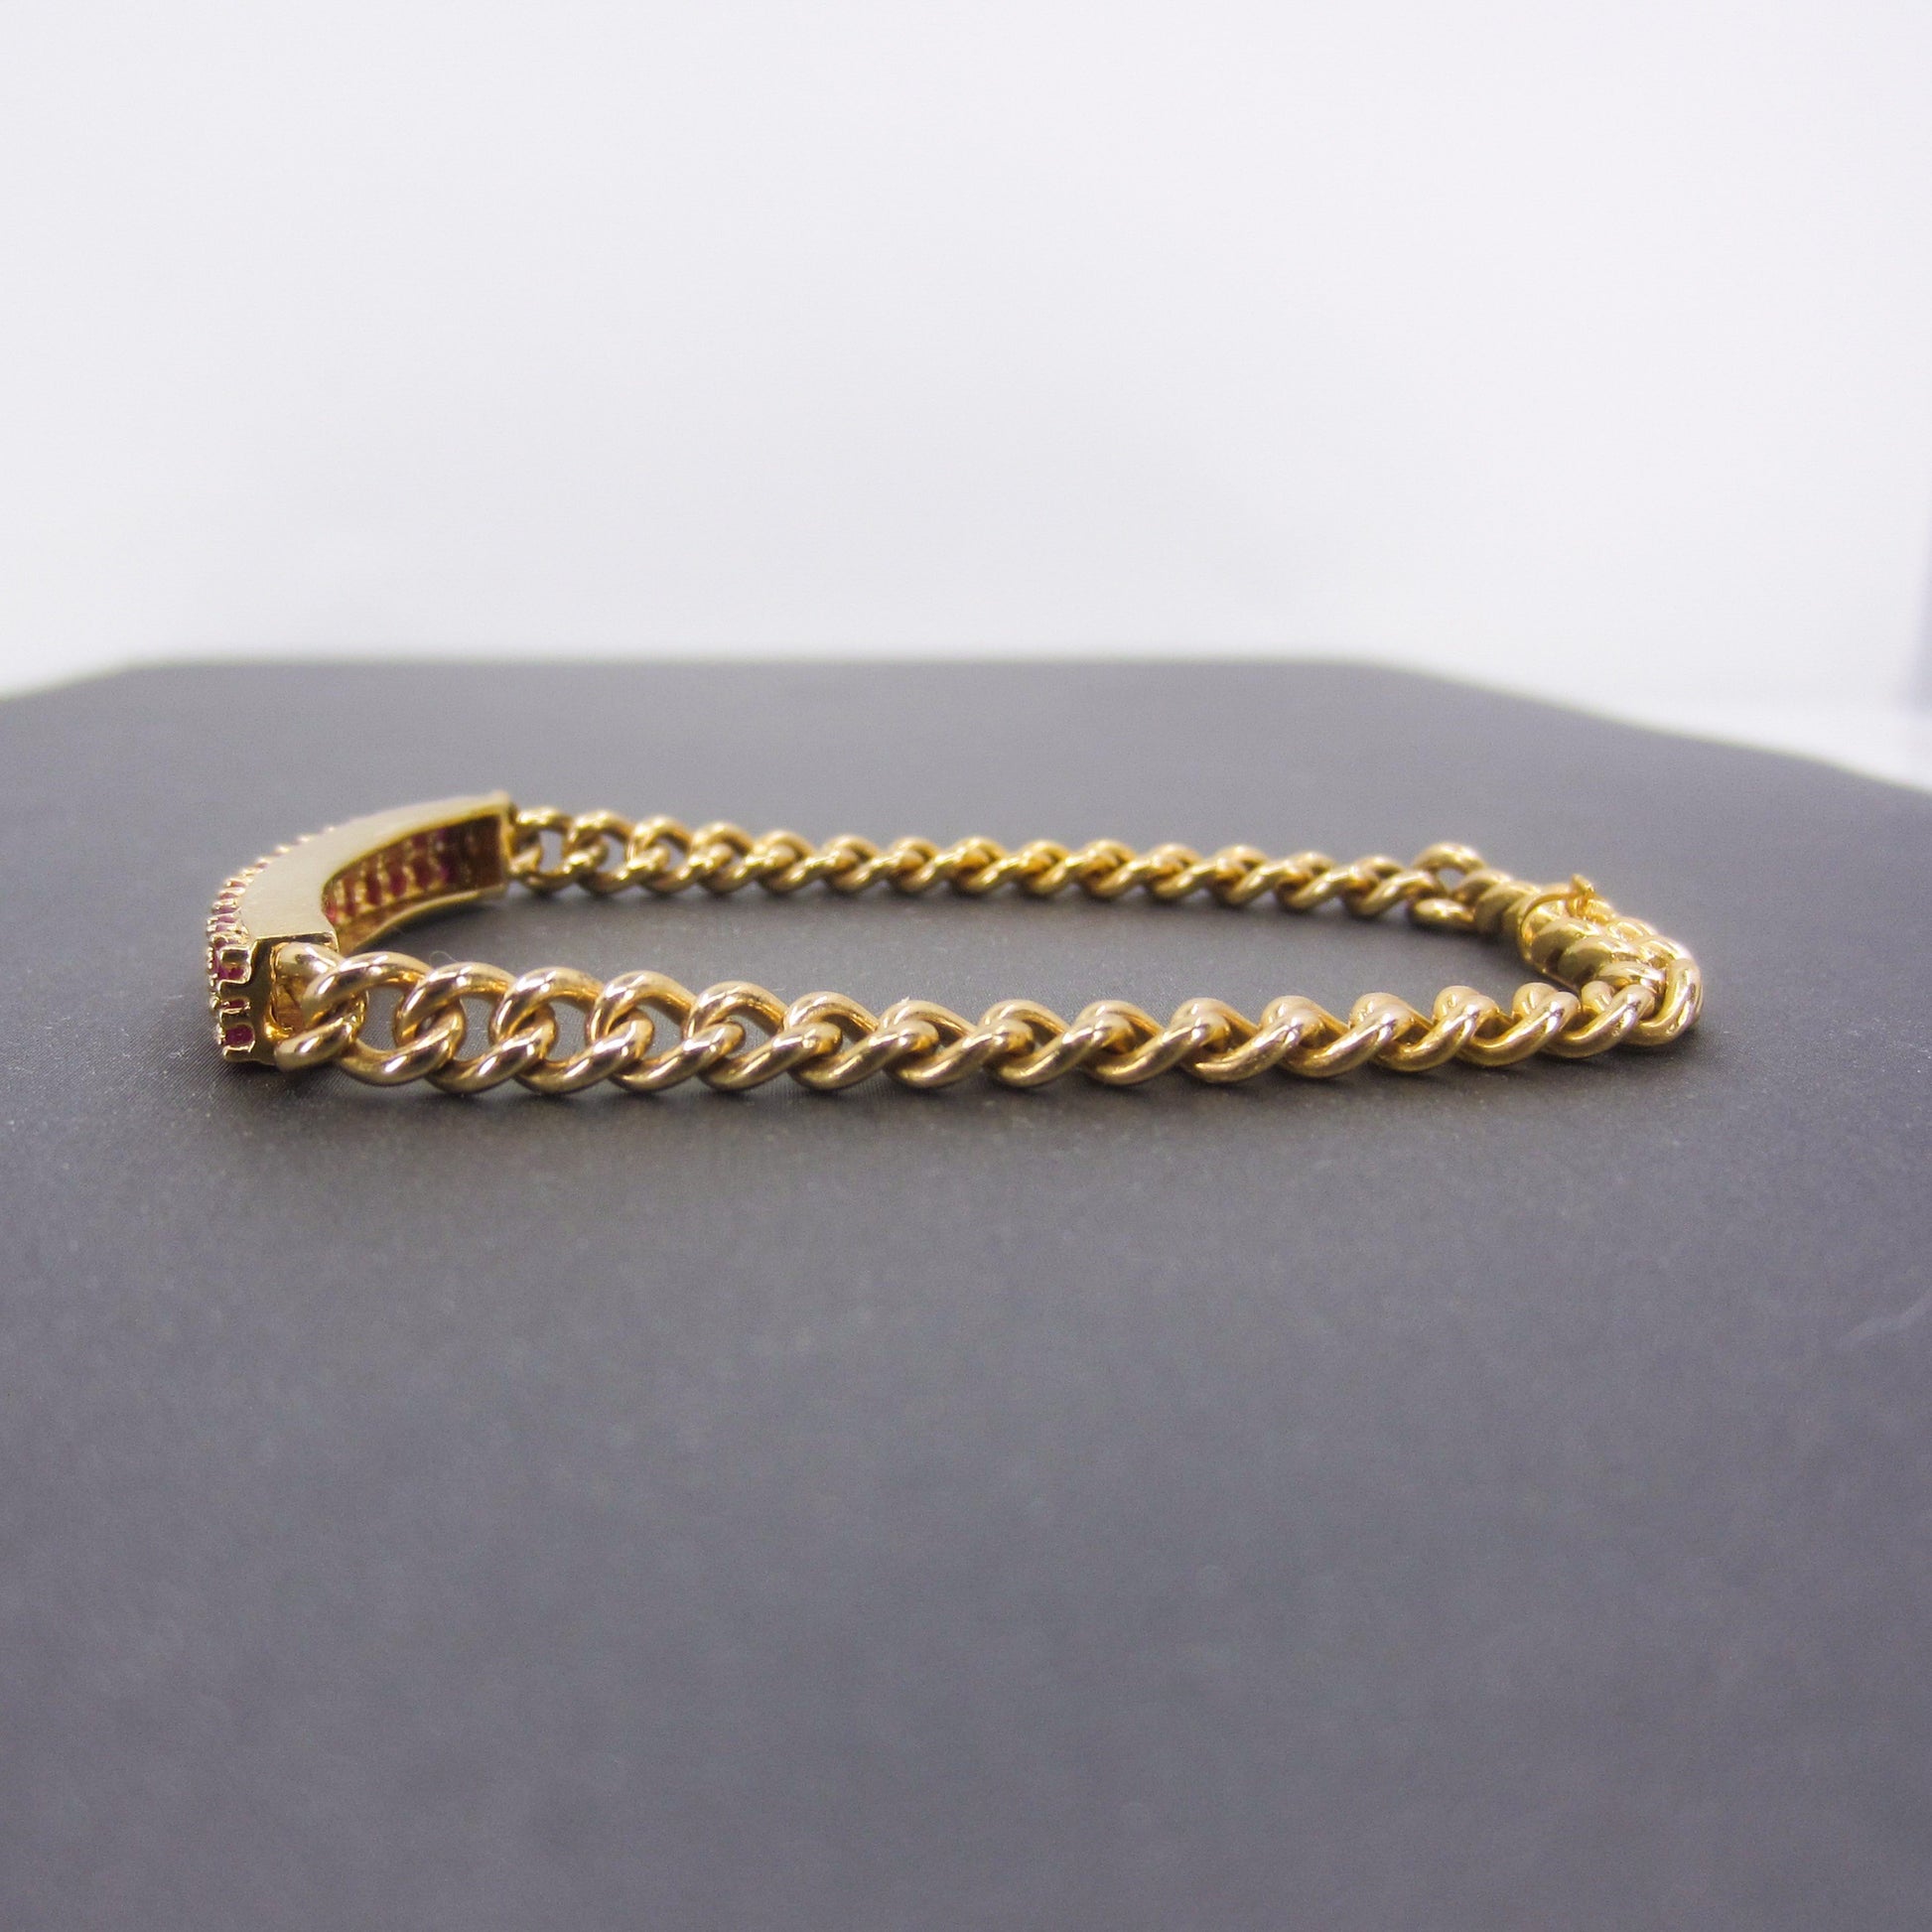 Vintage Woven and Chain-Link 14k Gold Bracelet